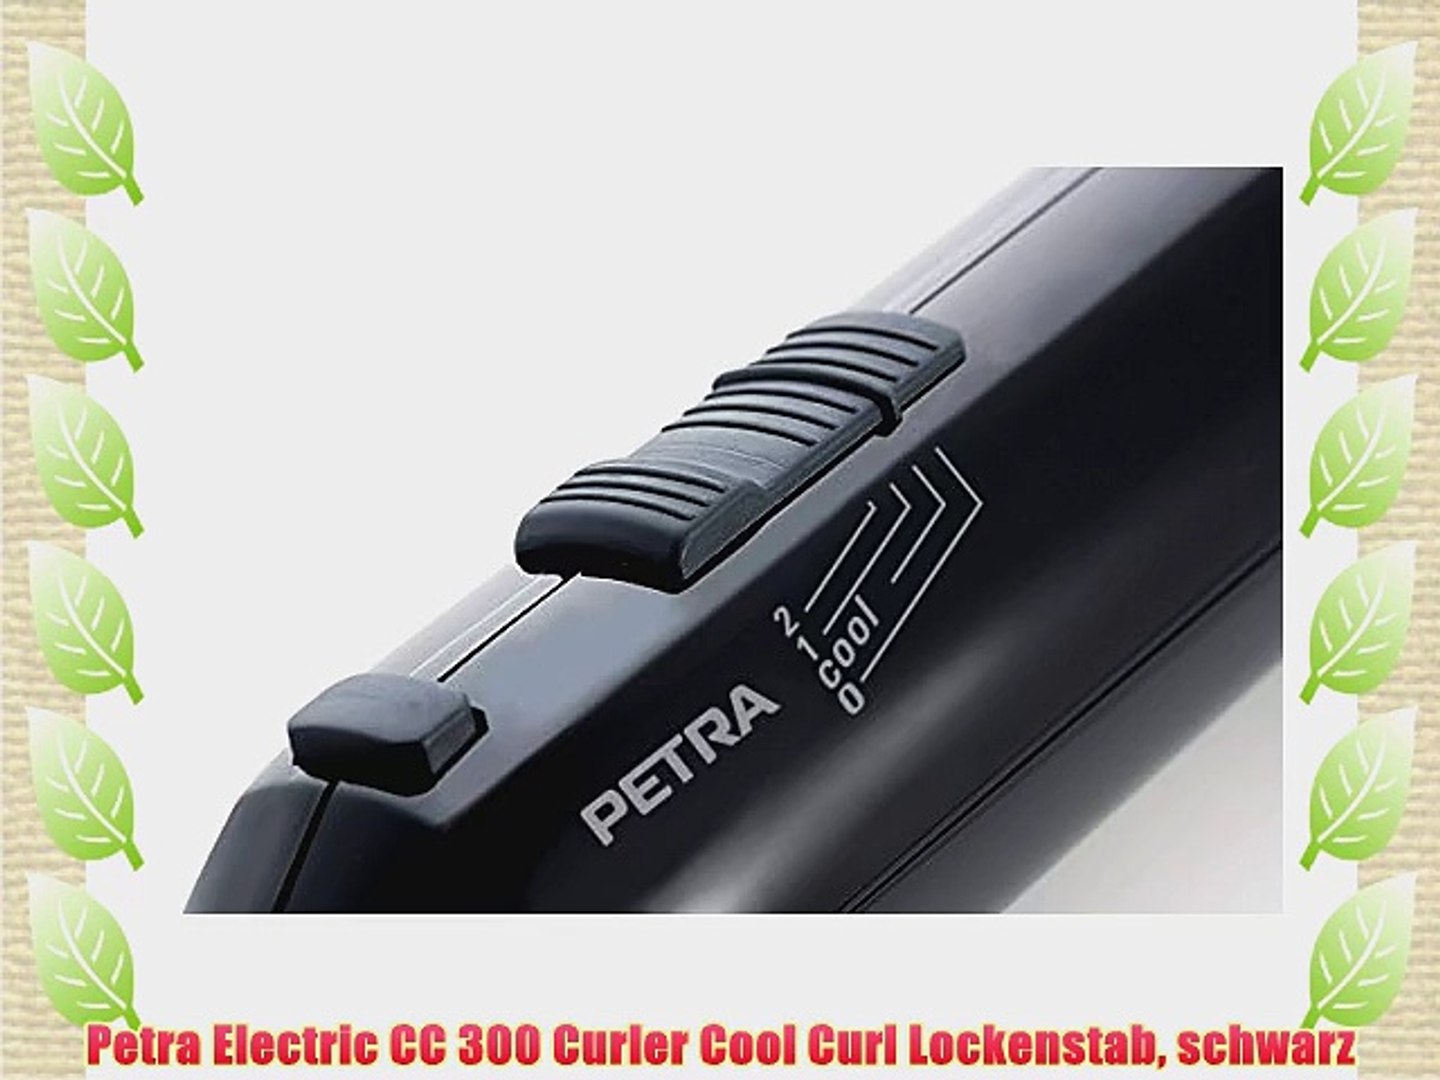 Petra Electric CC 300 Curler Cool Curl Lockenstab schwarz - video  Dailymotion